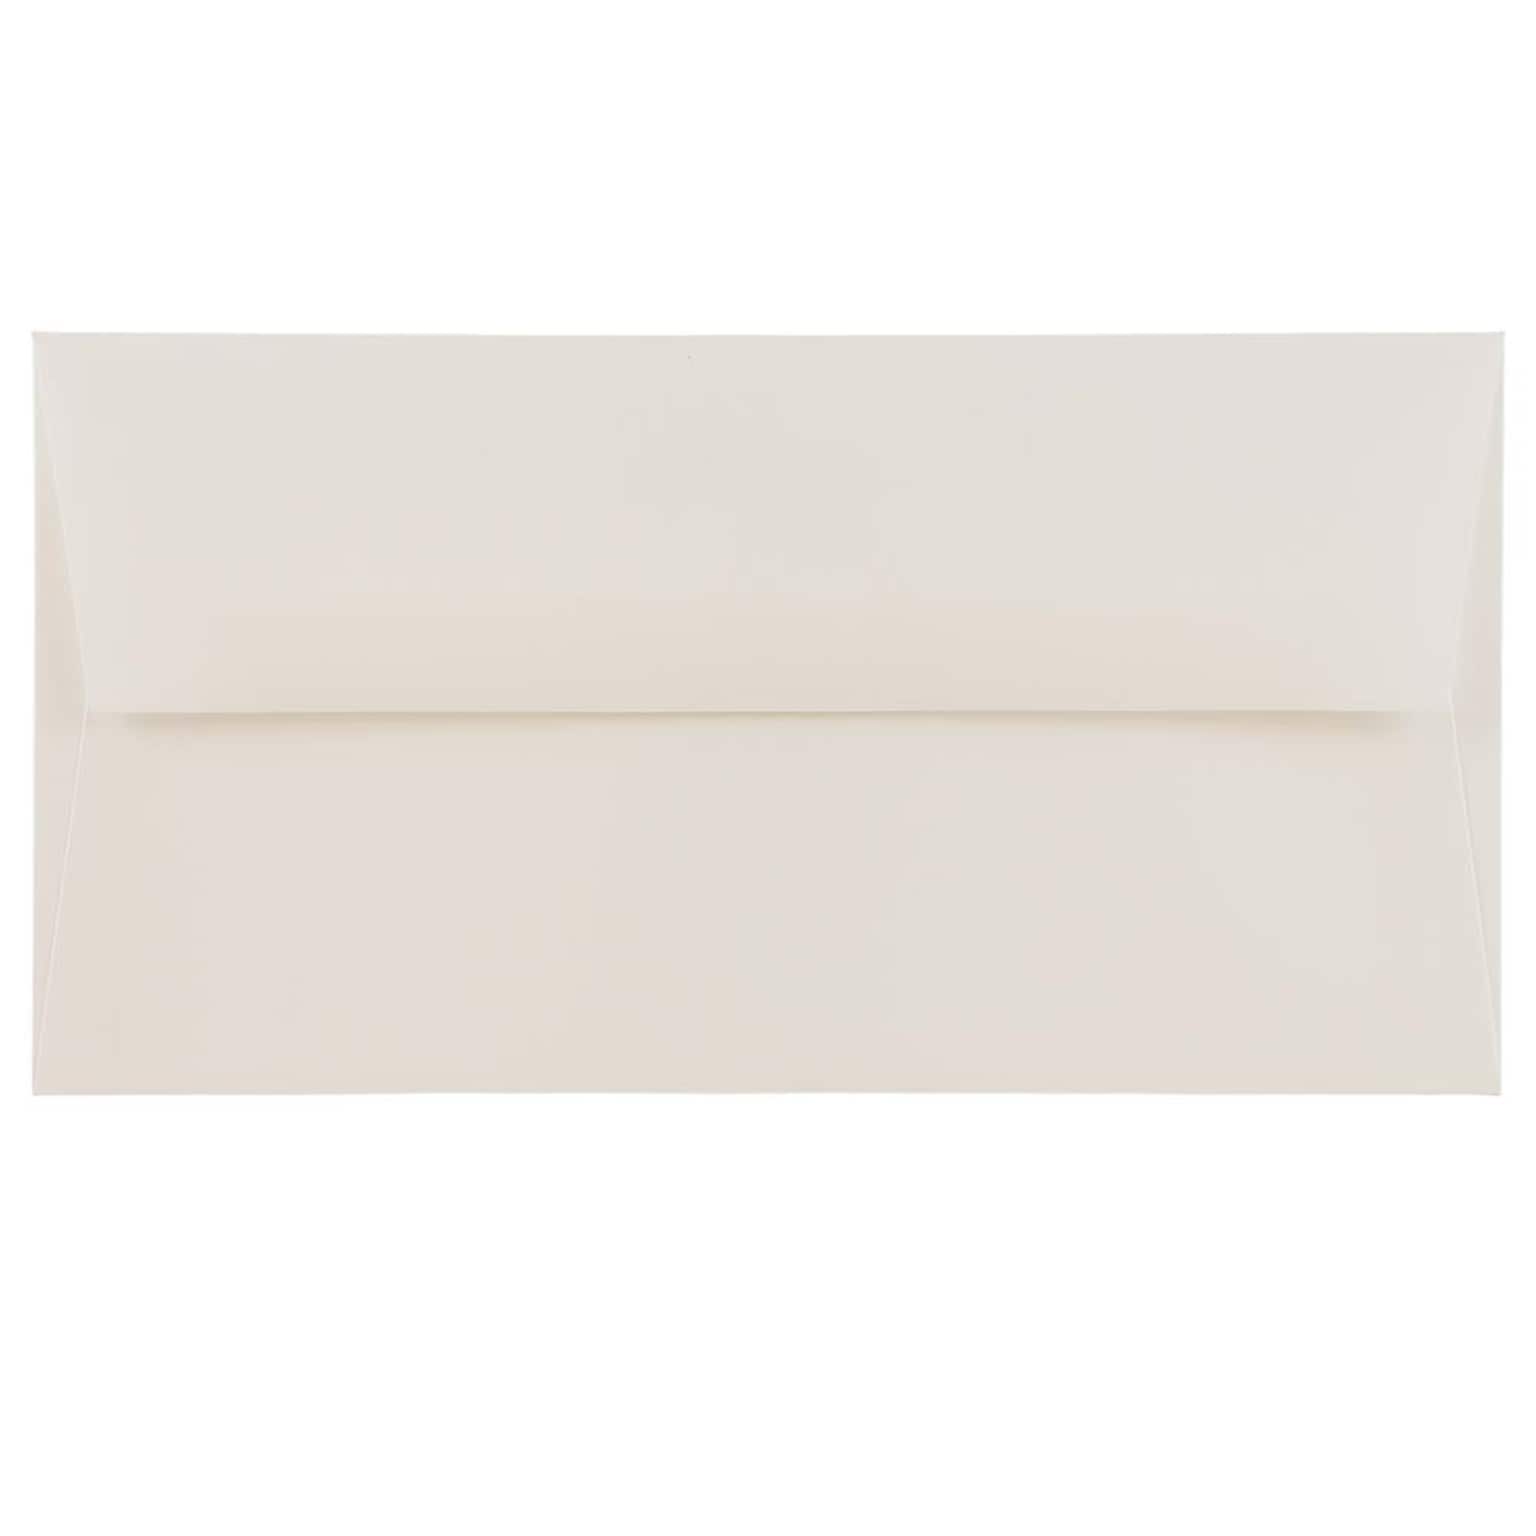 JAM Paper Monarch Open End Invitation Envelope, 3 7/8 x 7 1/2, Bright White, 50/Pack (196556I)